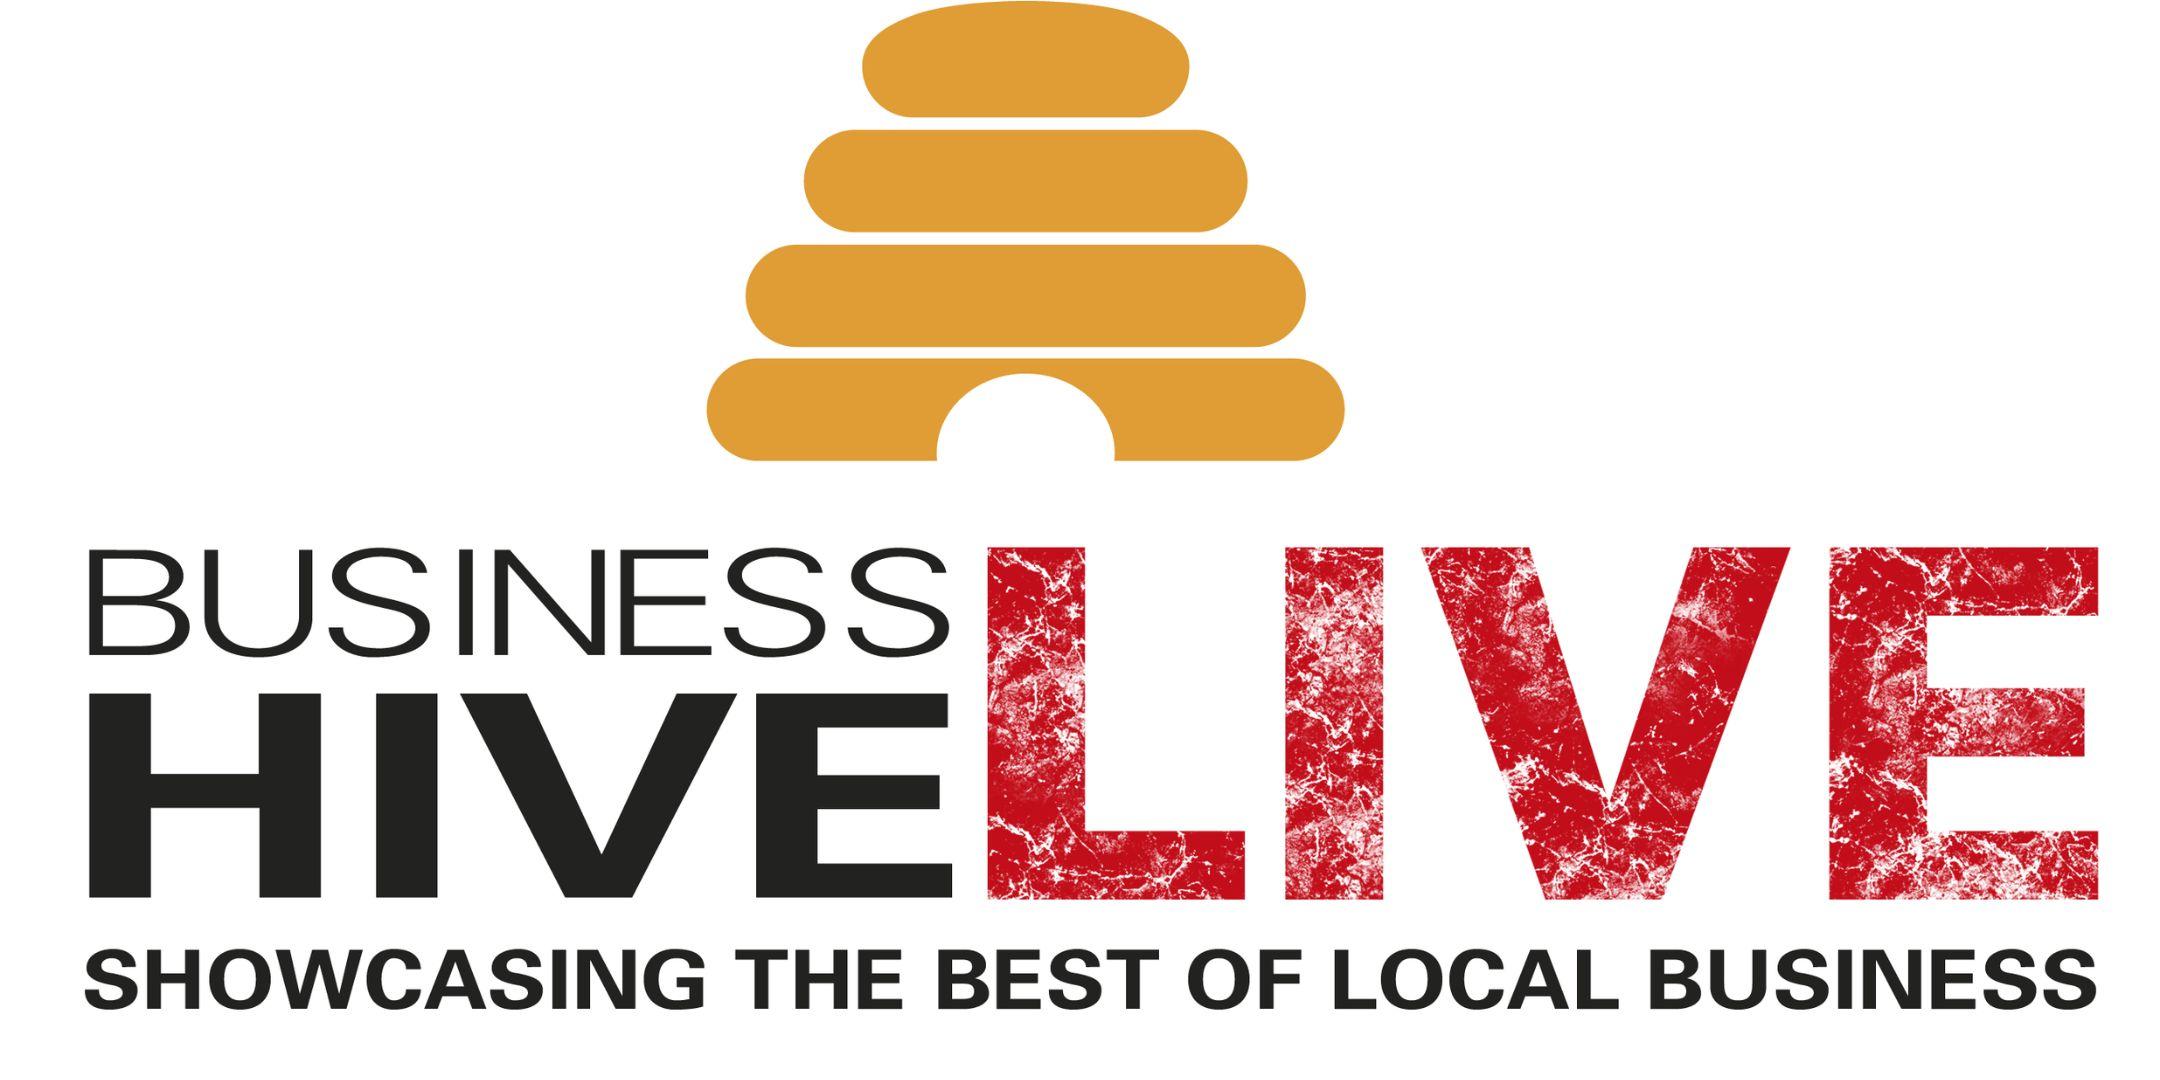 Live Business Hive logo.